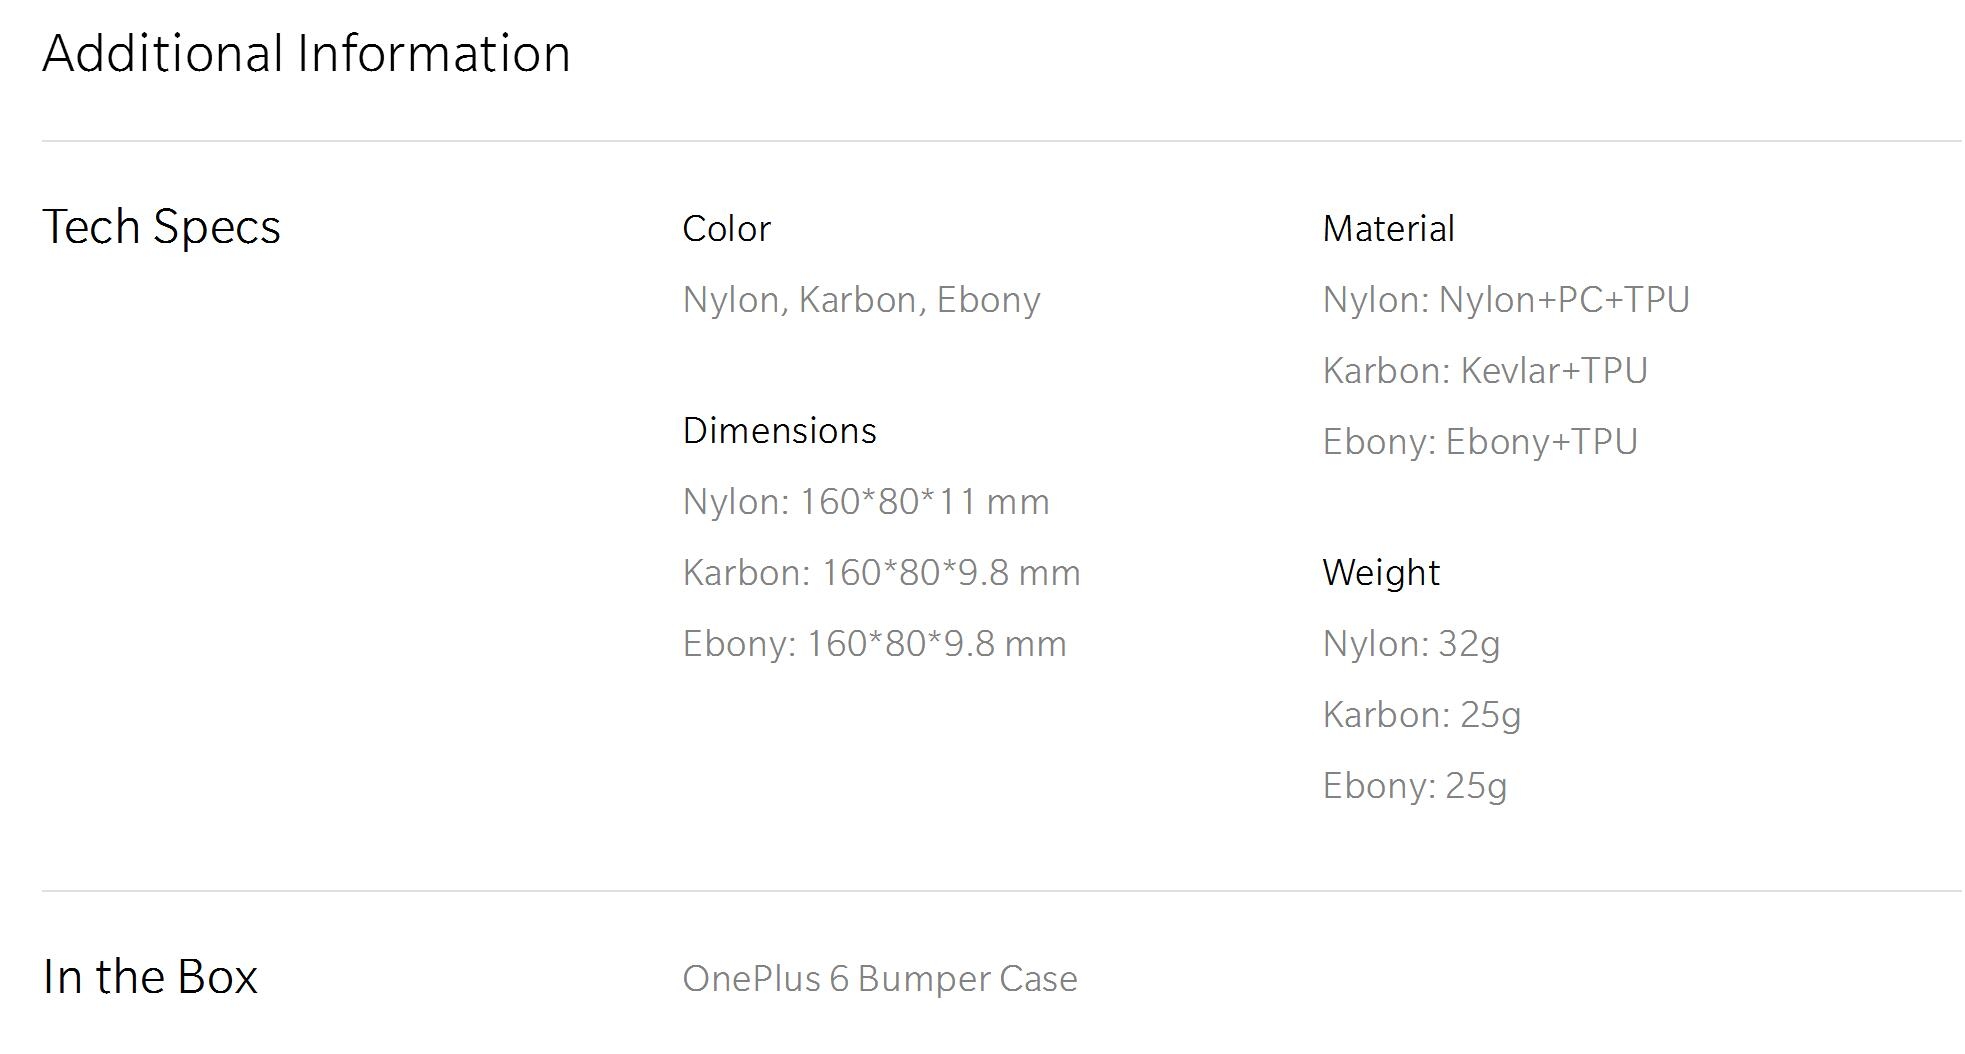 OnePlus 6 Bumper Case